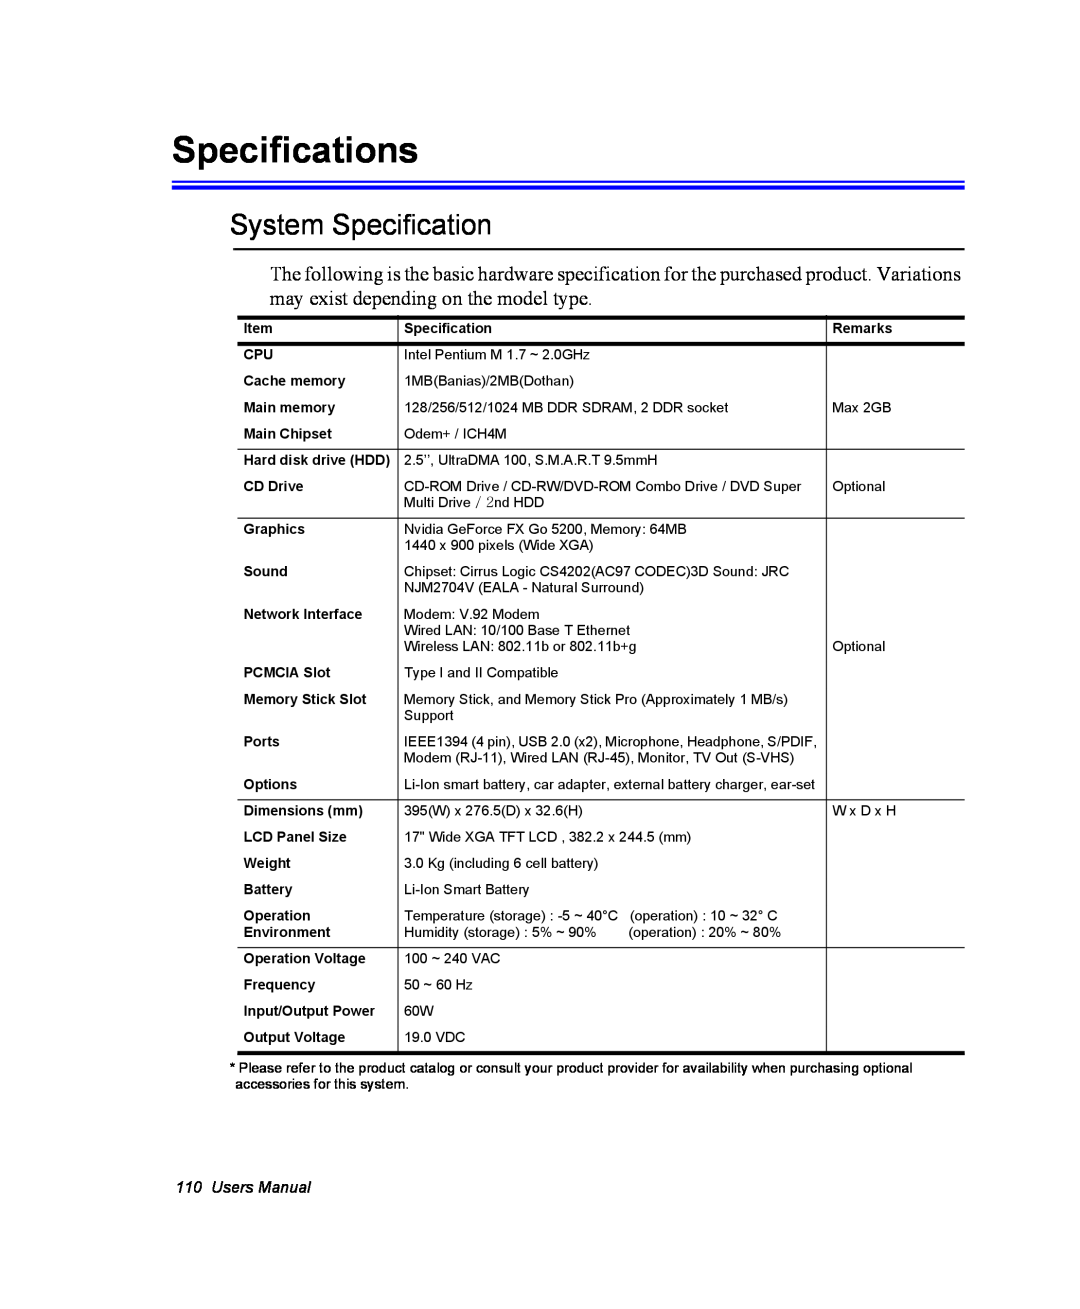 Samsung NM40TP0MG9/SEF, NM40PRDV02/SEF, NM40PRCV01/SEF, NM40PRTV02/SEF Specifications, System Specification, Users Manual 